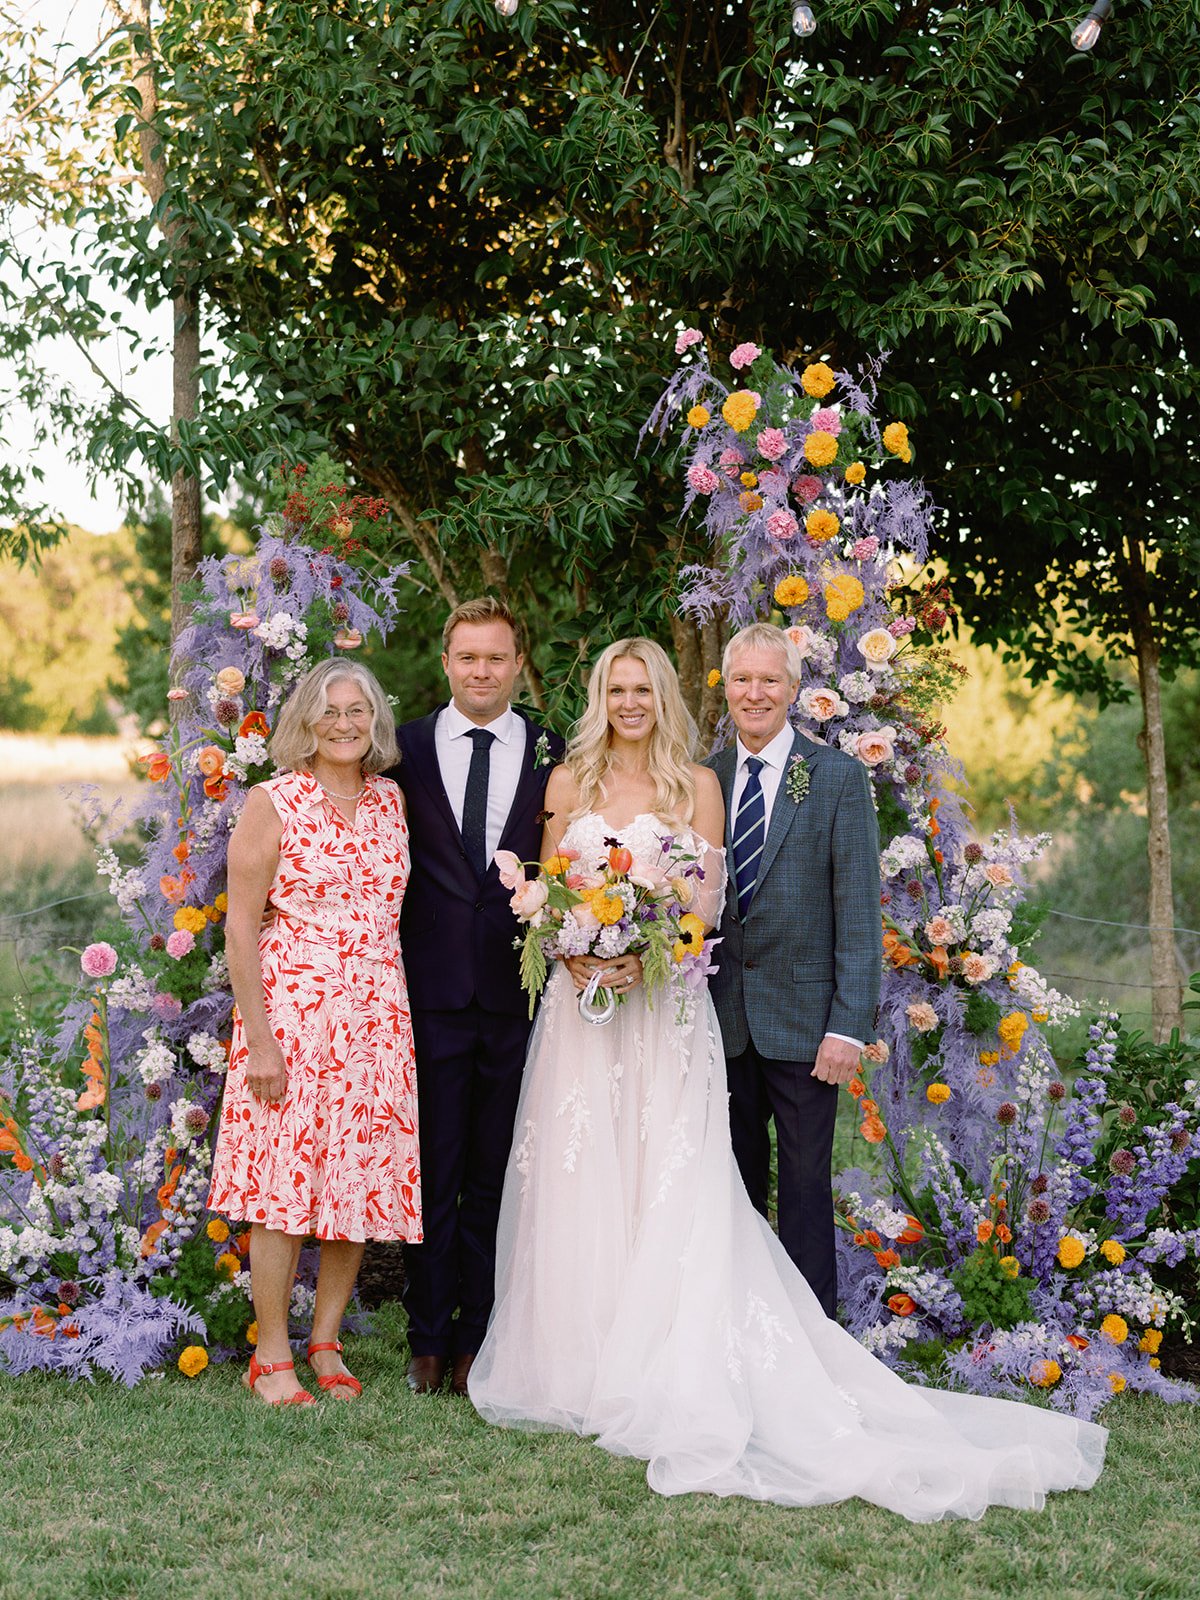 Best-Austin-Wedding-Photographers-Elopement-Film-35mm-Asheville-Santa-Barbara-Backyard-89.jpg